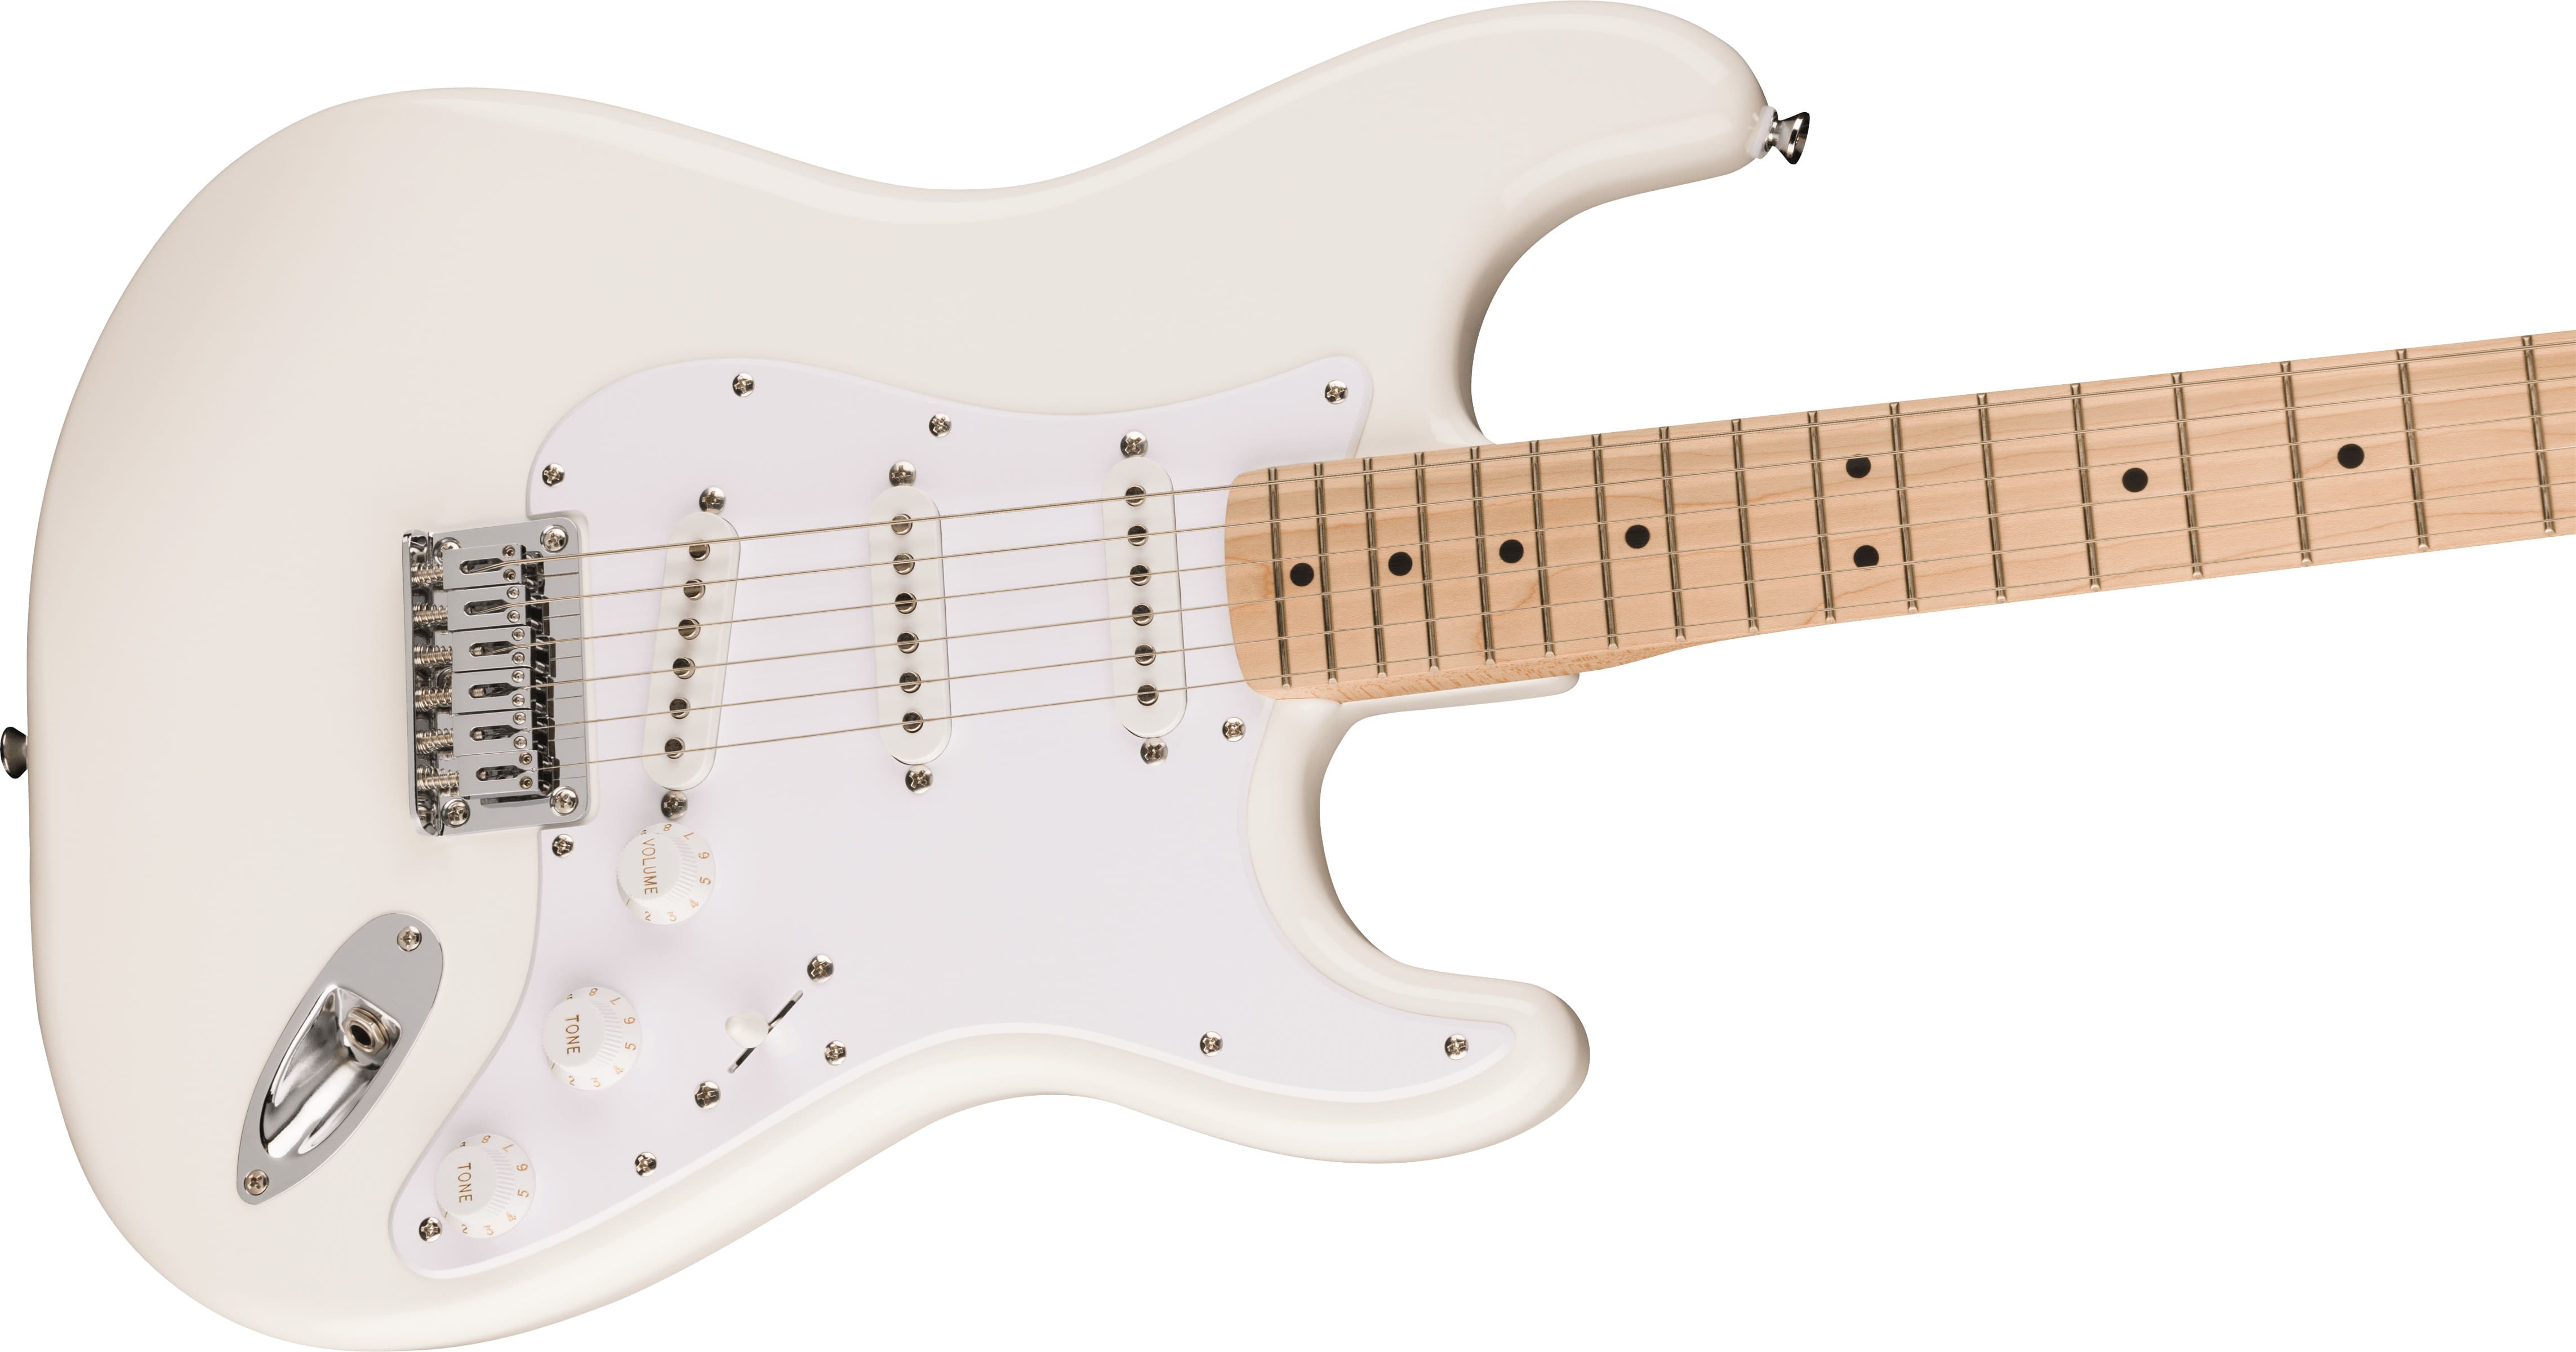 Характеристики электрогитары. Электрогитара Fender Stratocaster. Гитара Фендер стратокастер. Fender Stratocaster Olympic White. Электрогитара Fender American.